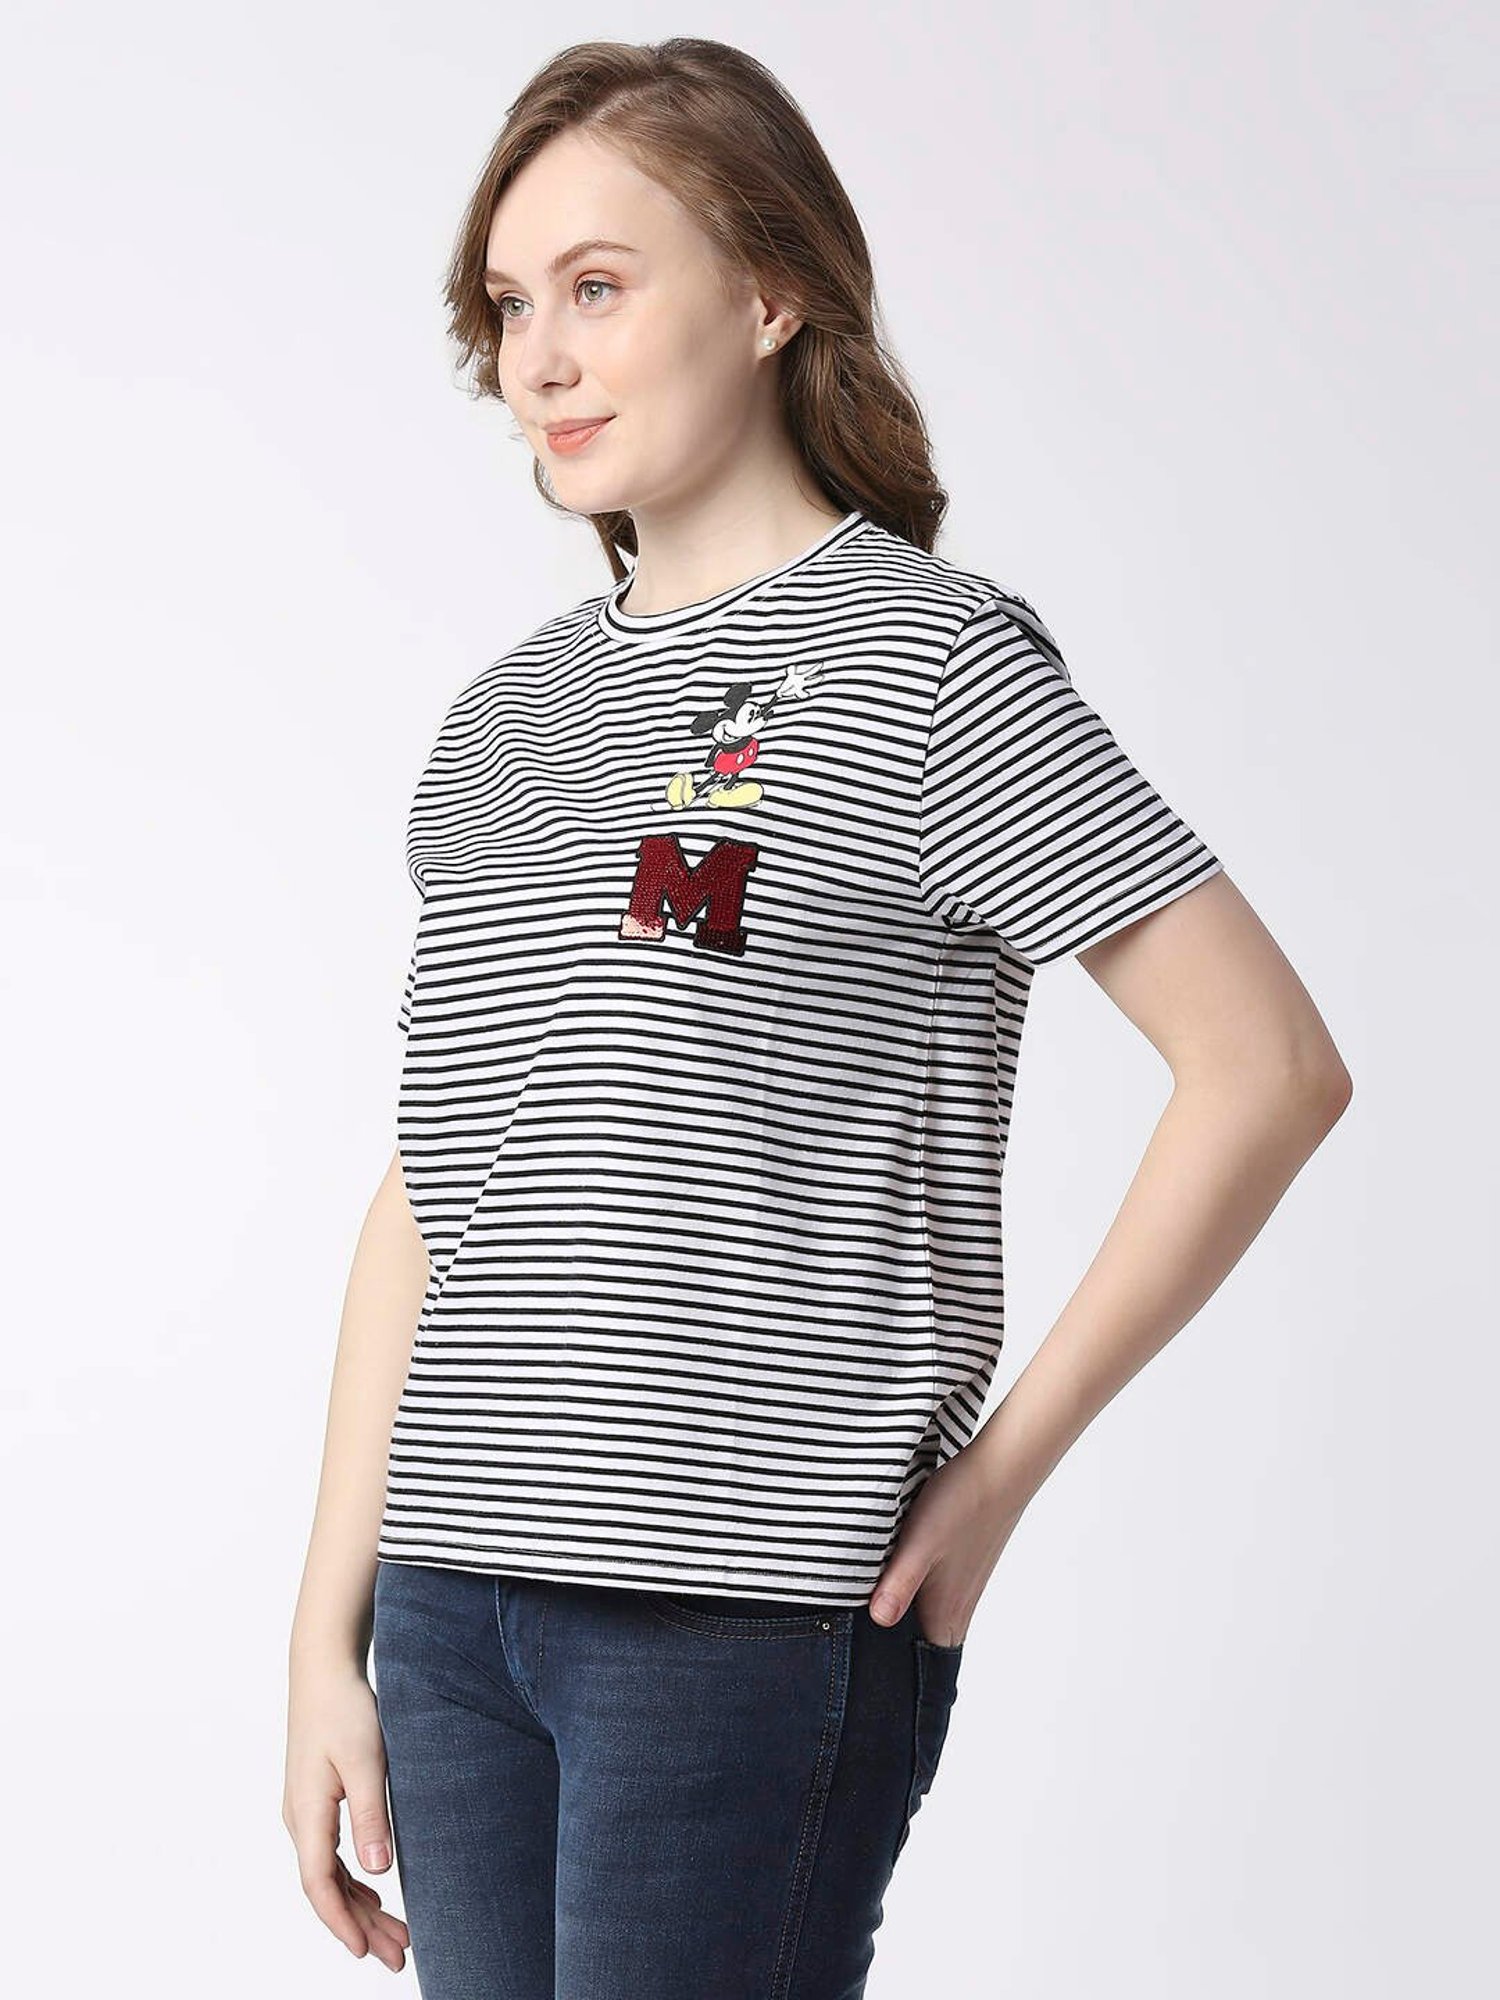 Buy Pepe Jeans Black & White Striped T-Shirt for Women's Online @ Tata CLiQ